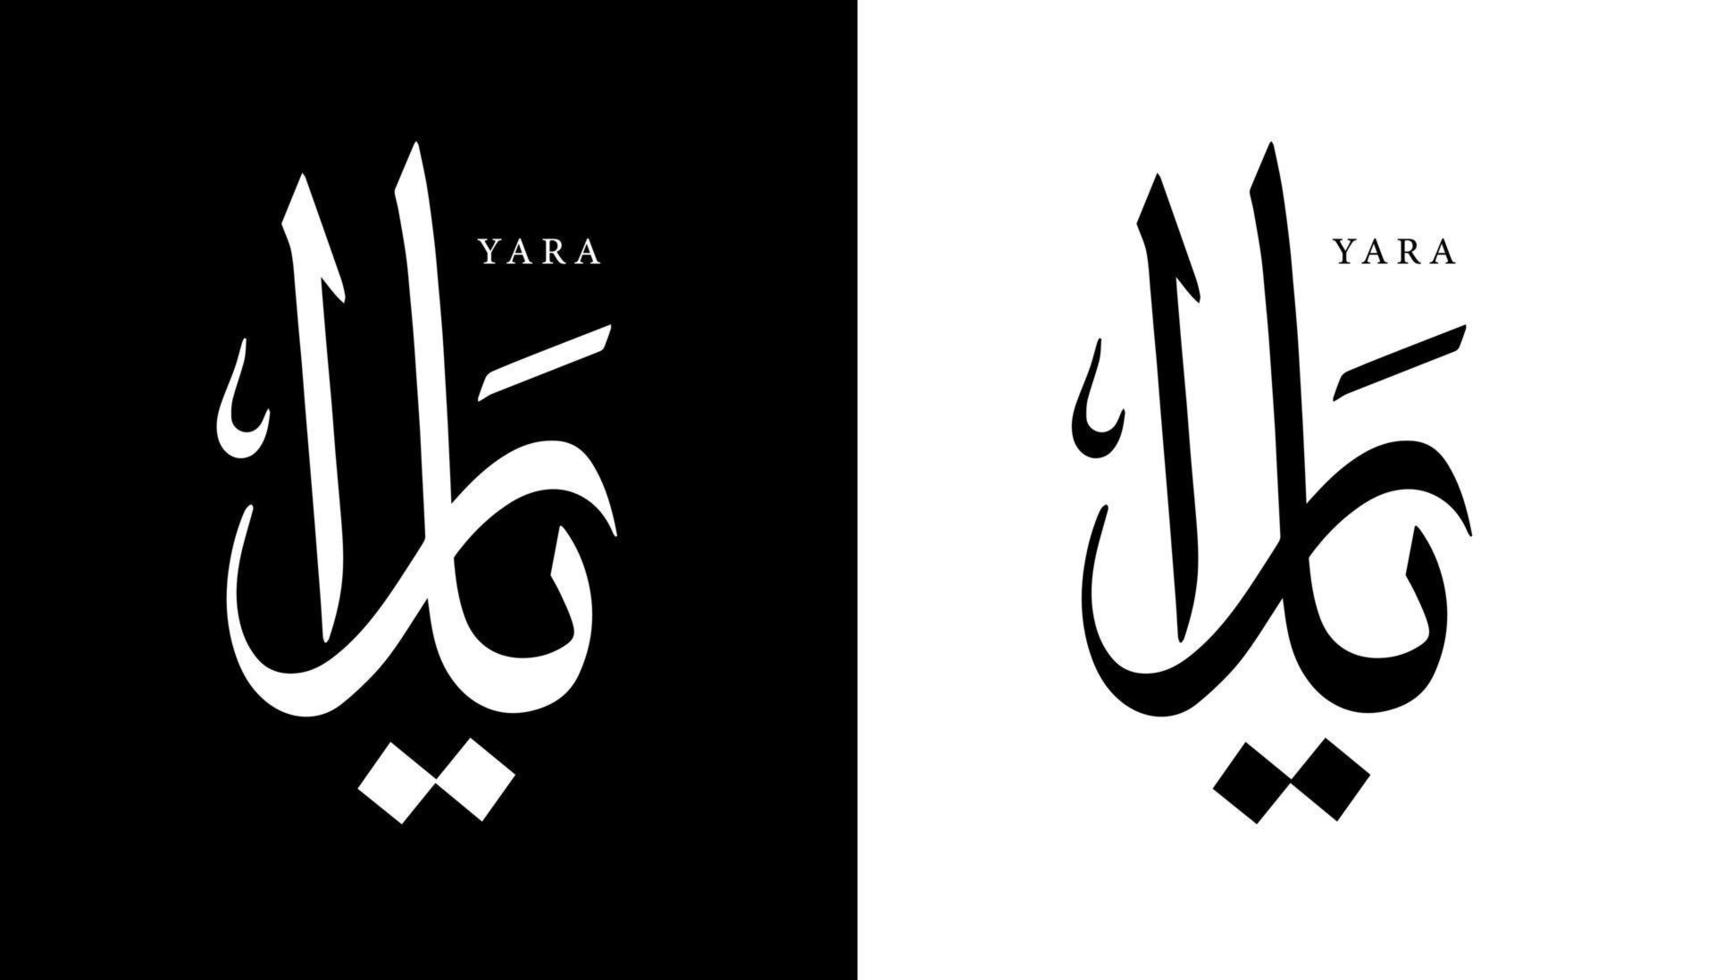 calligraphie arabe nom traduit 'yara' lettres arabes alphabet police lettrage logo islamique illustration vectorielle vecteur